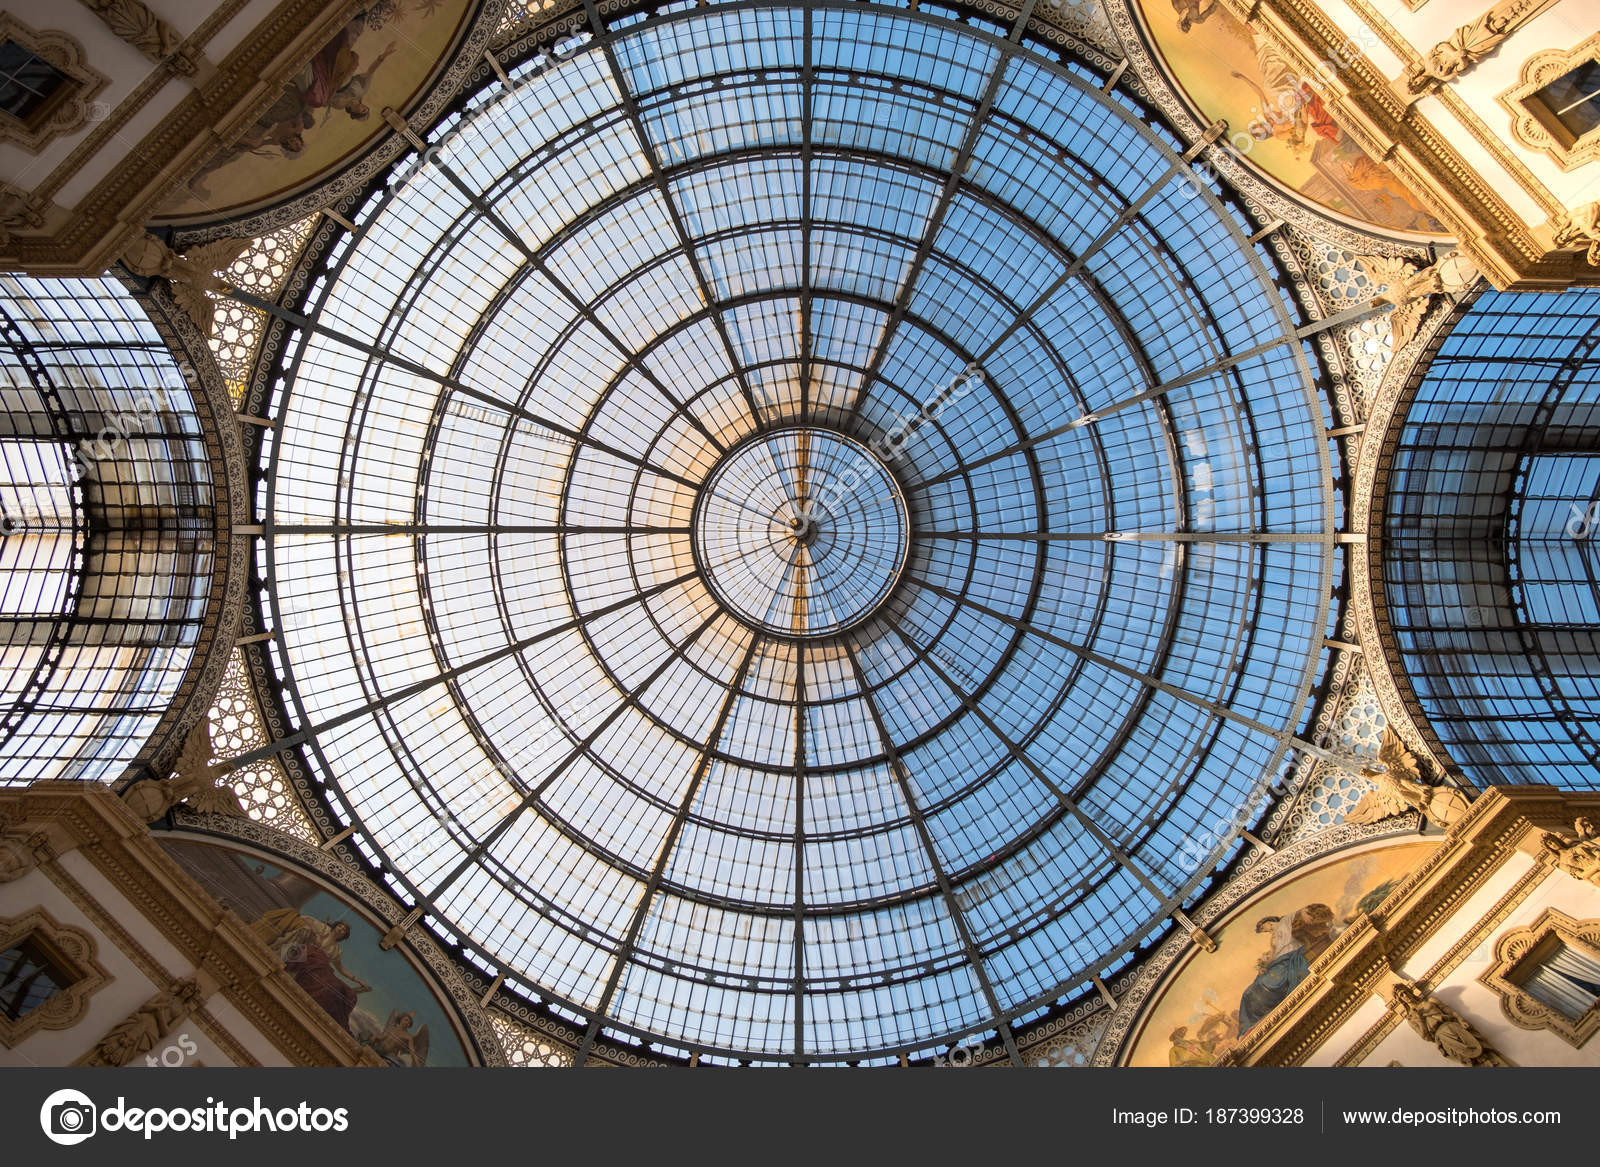 Galleria Vittorio Emanuele II in Milan: the oldest shopping centre